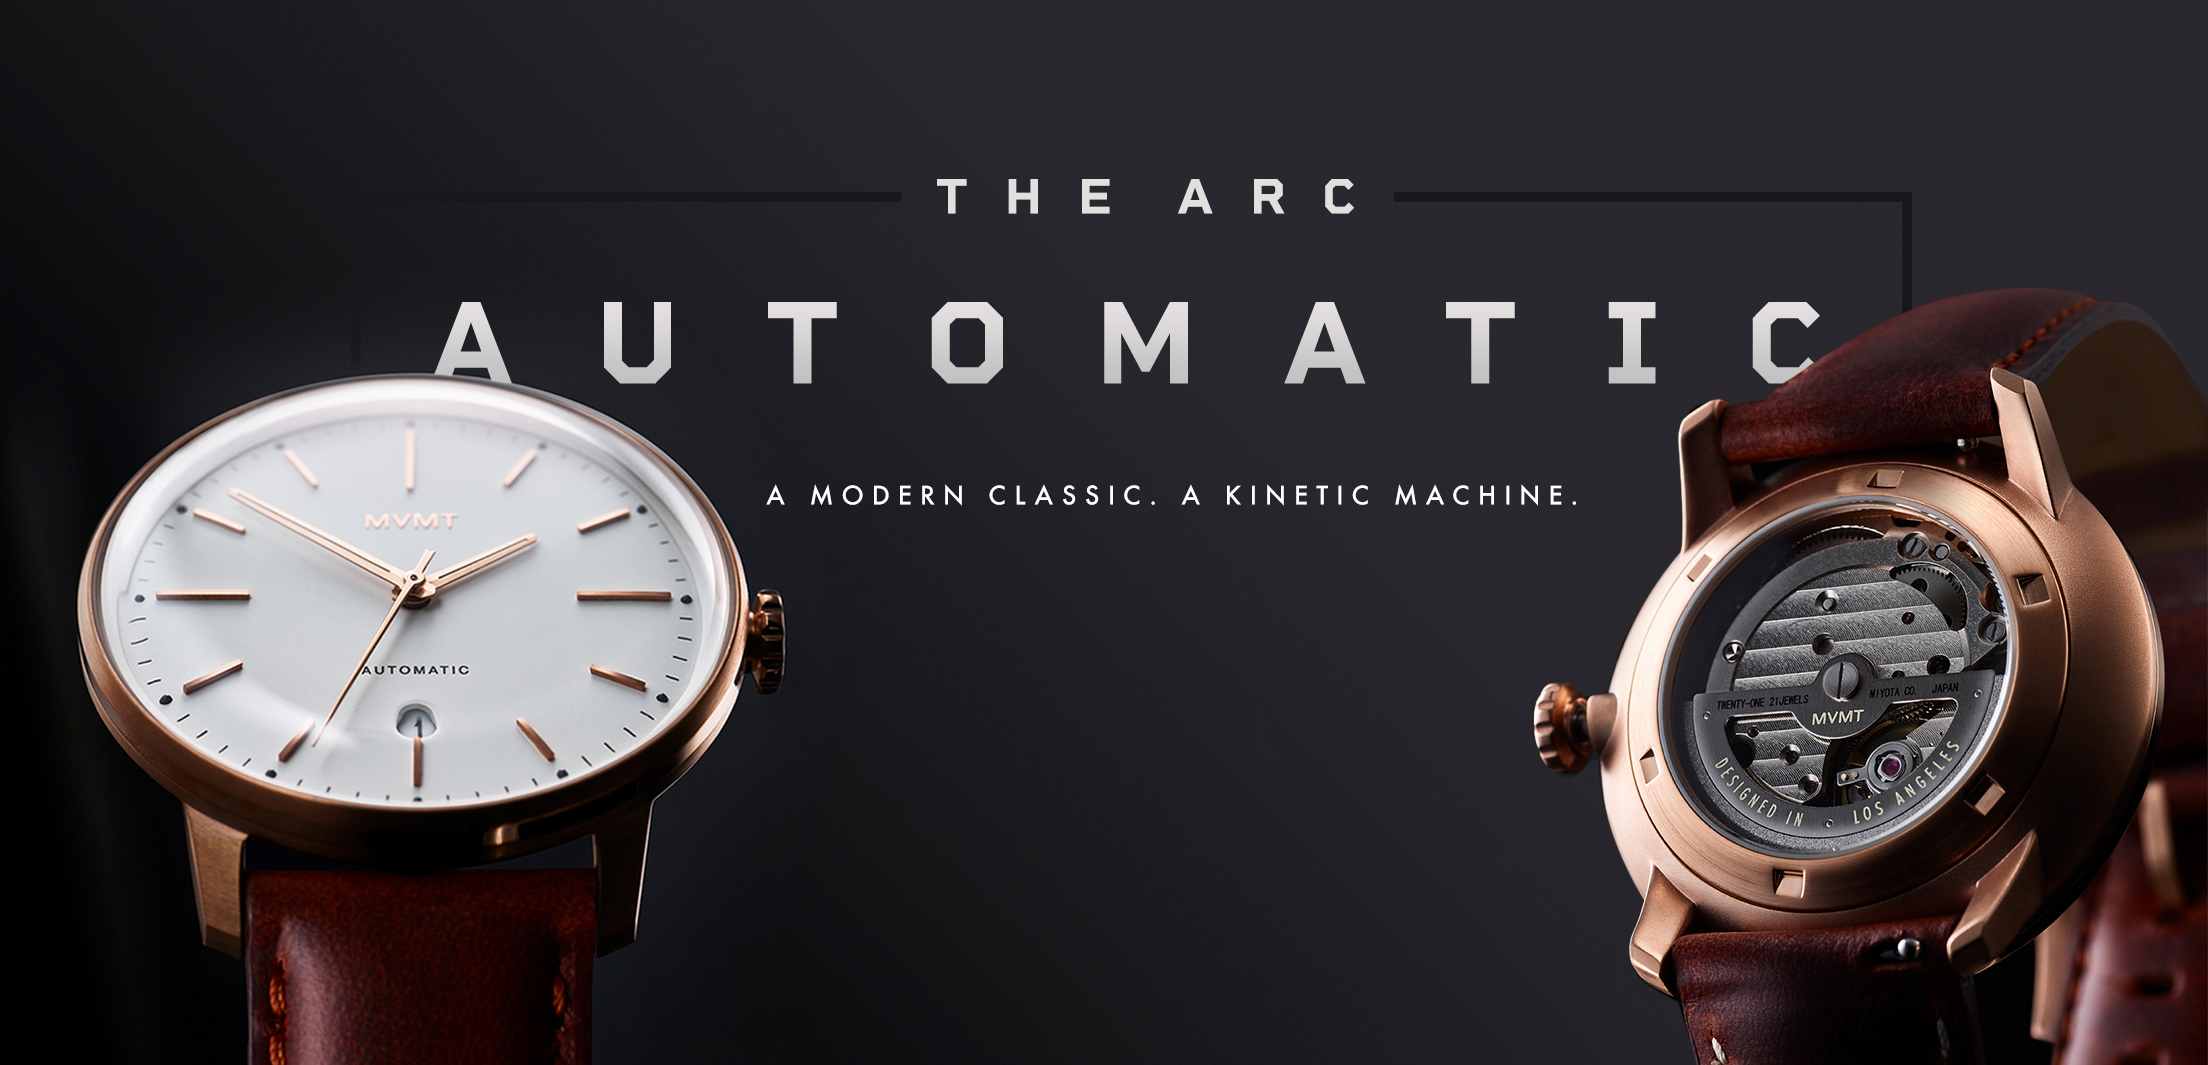 The Arc Automatic. A modern classic. A kinetic machine.